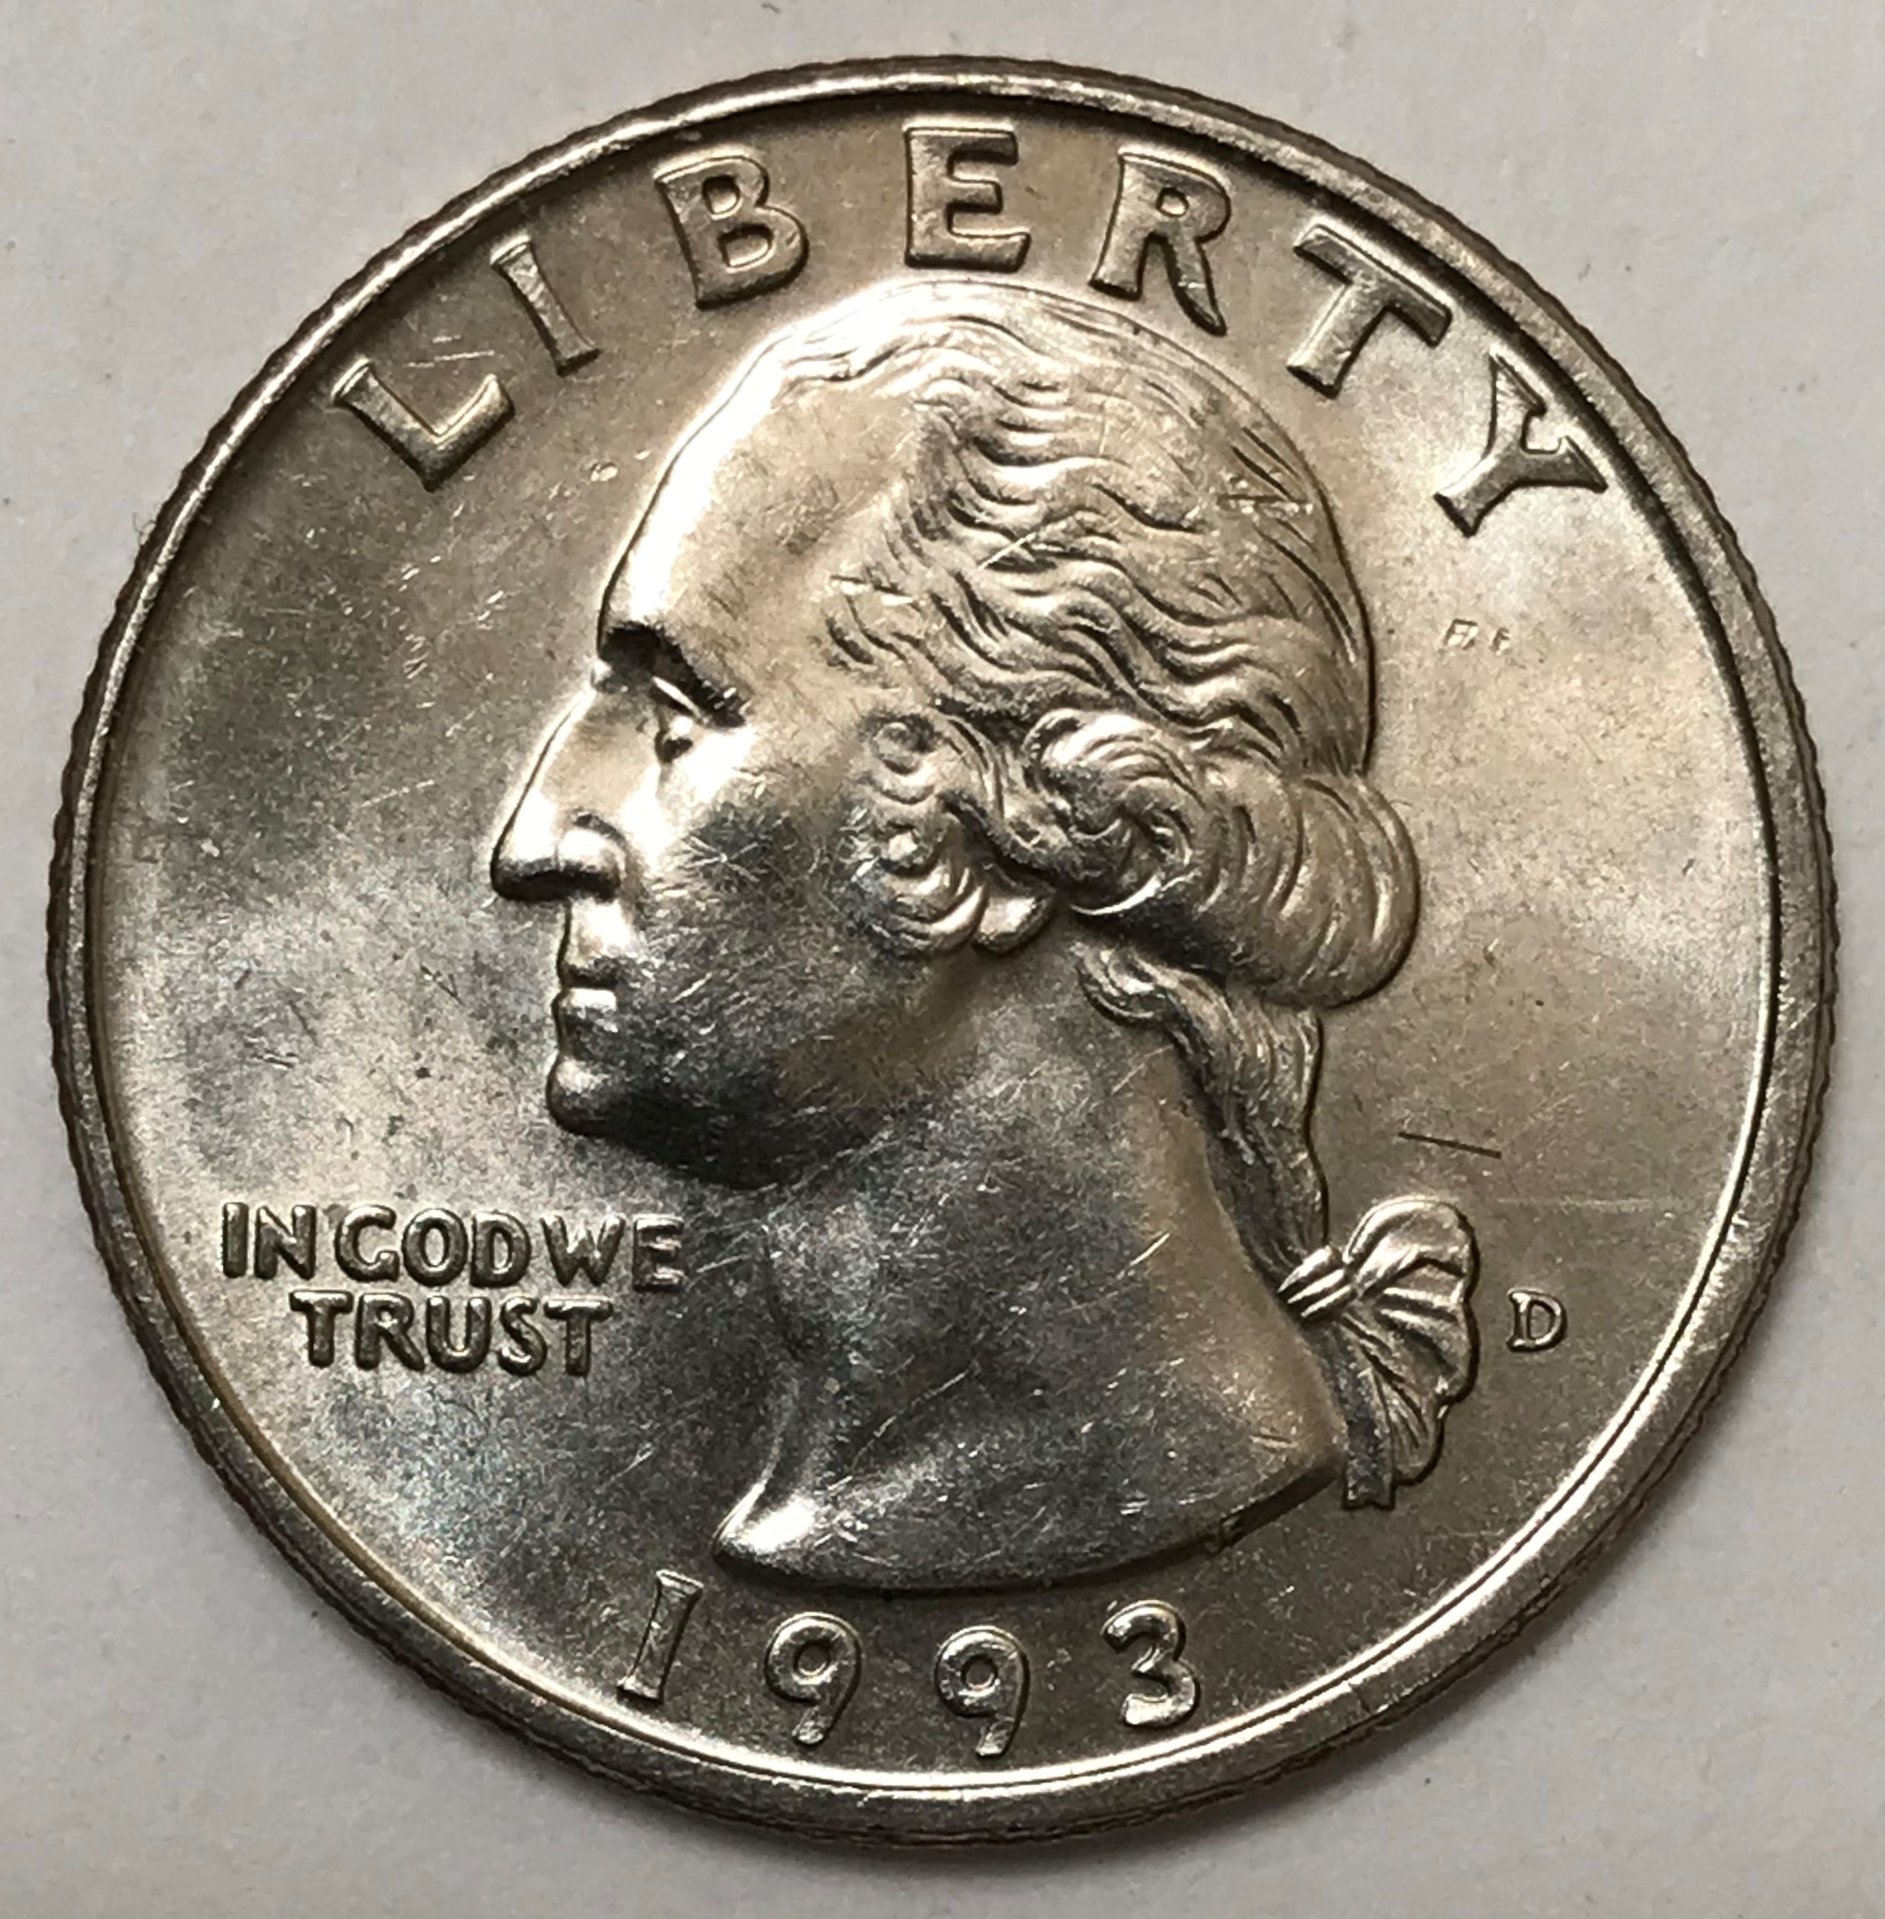 1993 D Washington Quarter - Obv pocket change.JPG